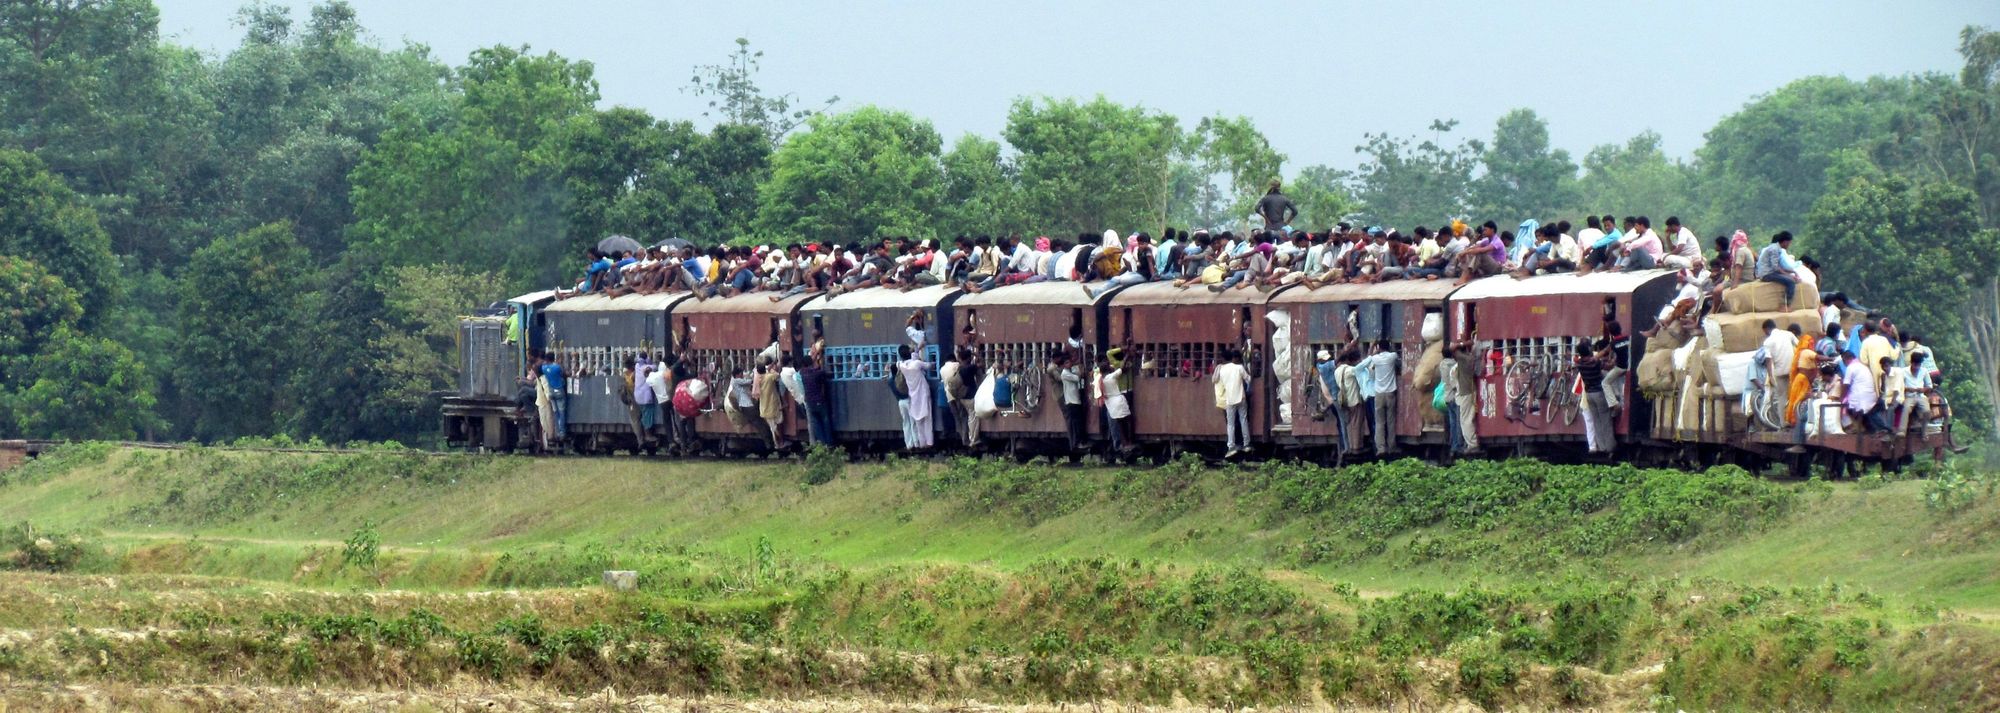 A crowded train on the Janakpur - Jainagar railway in Nepal